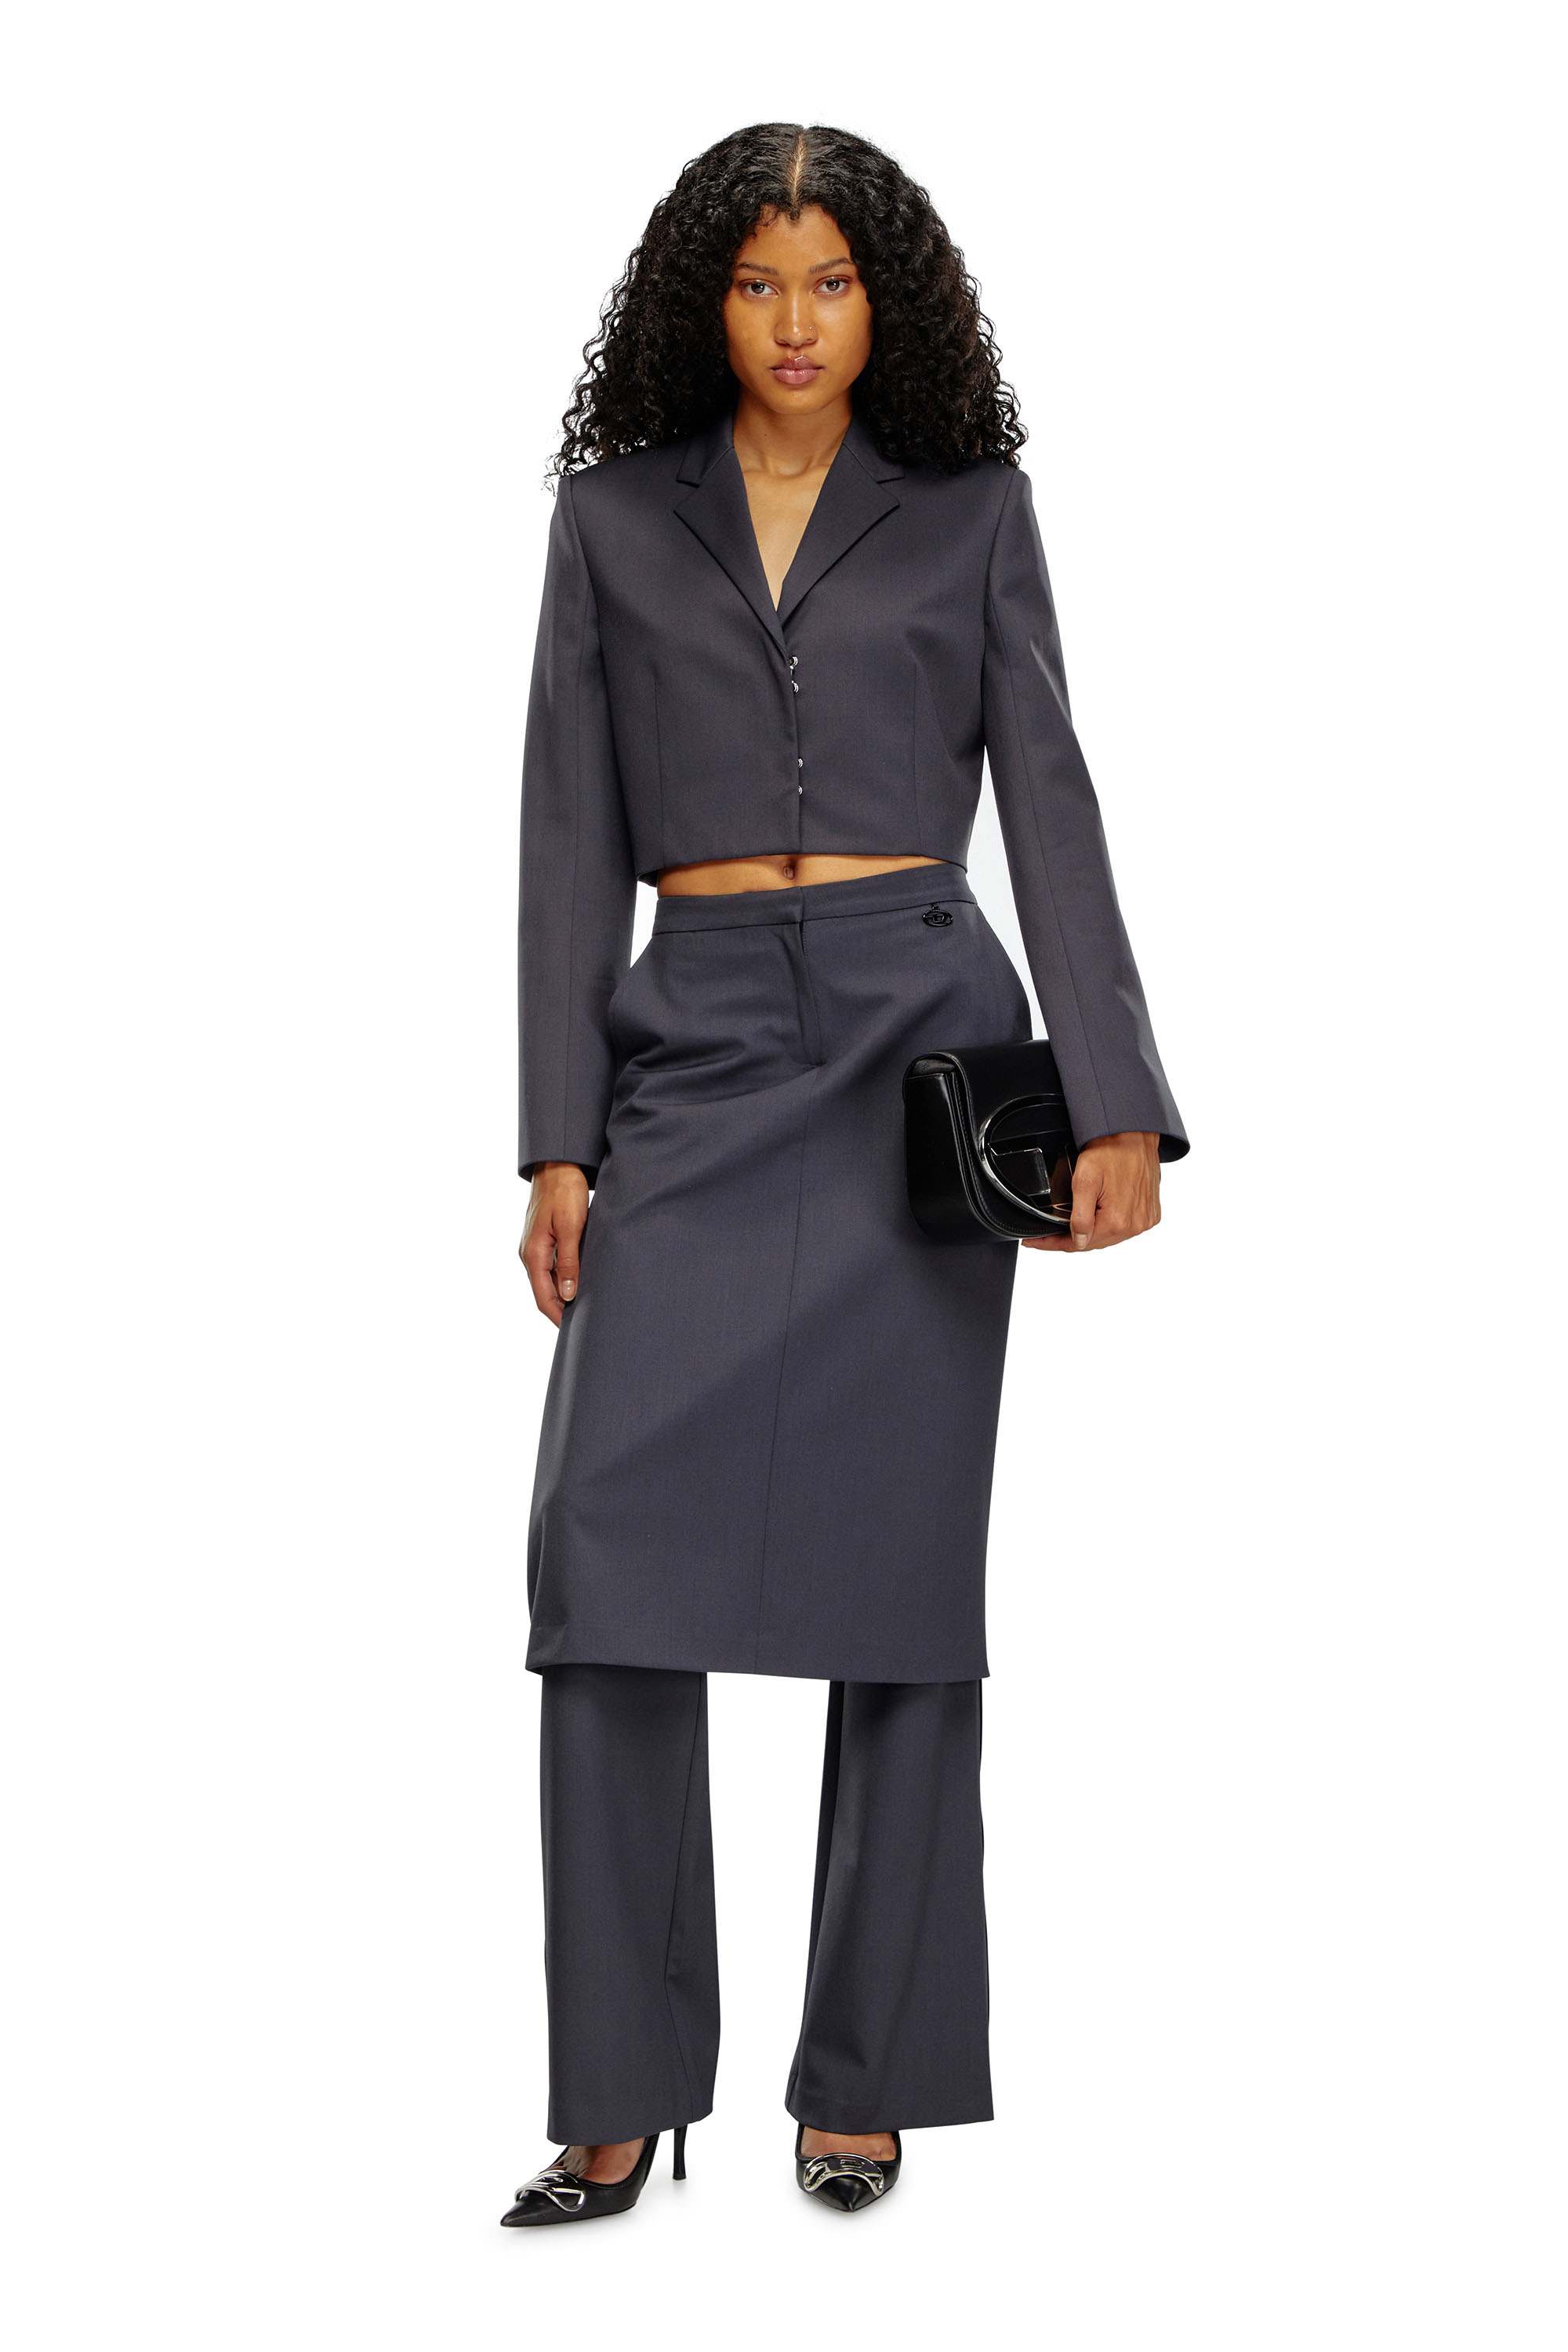 Diesel - G-MILLA-P1, Female Cropped blazer in stretch wool blend in グレー - Image 2